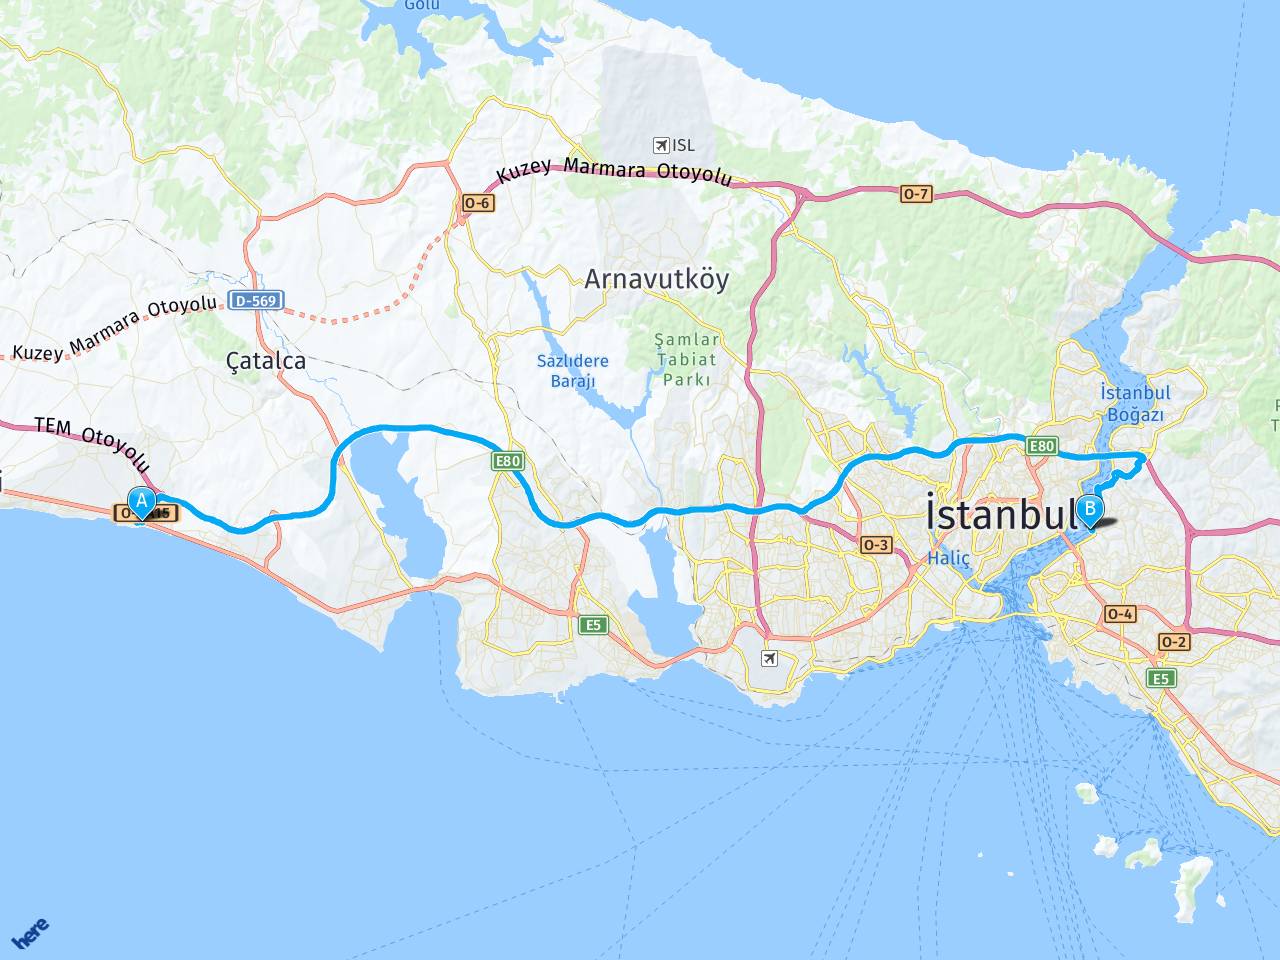 İstanbul, Silivri ilivri Selimpaşa İstanbul, Çengelköy